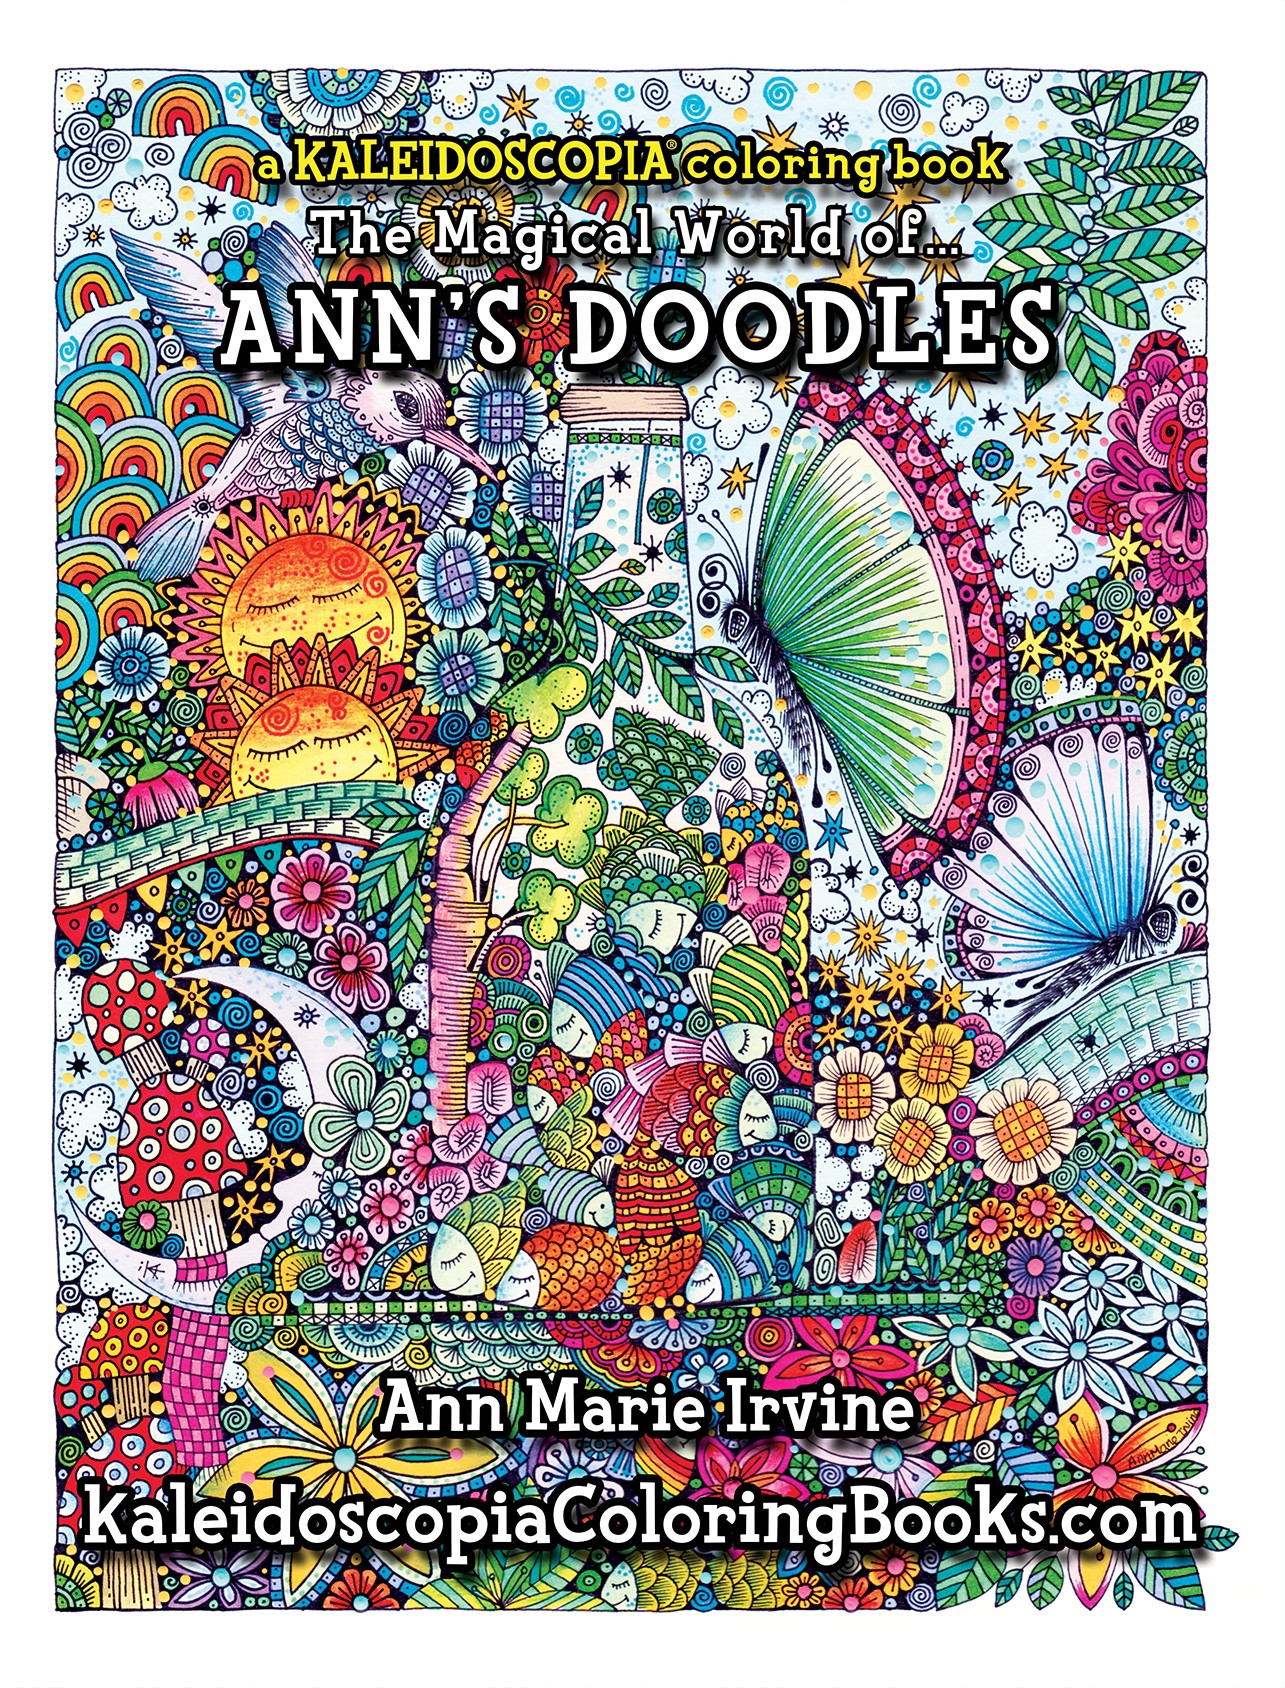 Ann's Doodles: A Kaleidoscopia Coloring Book: The Magical World of 